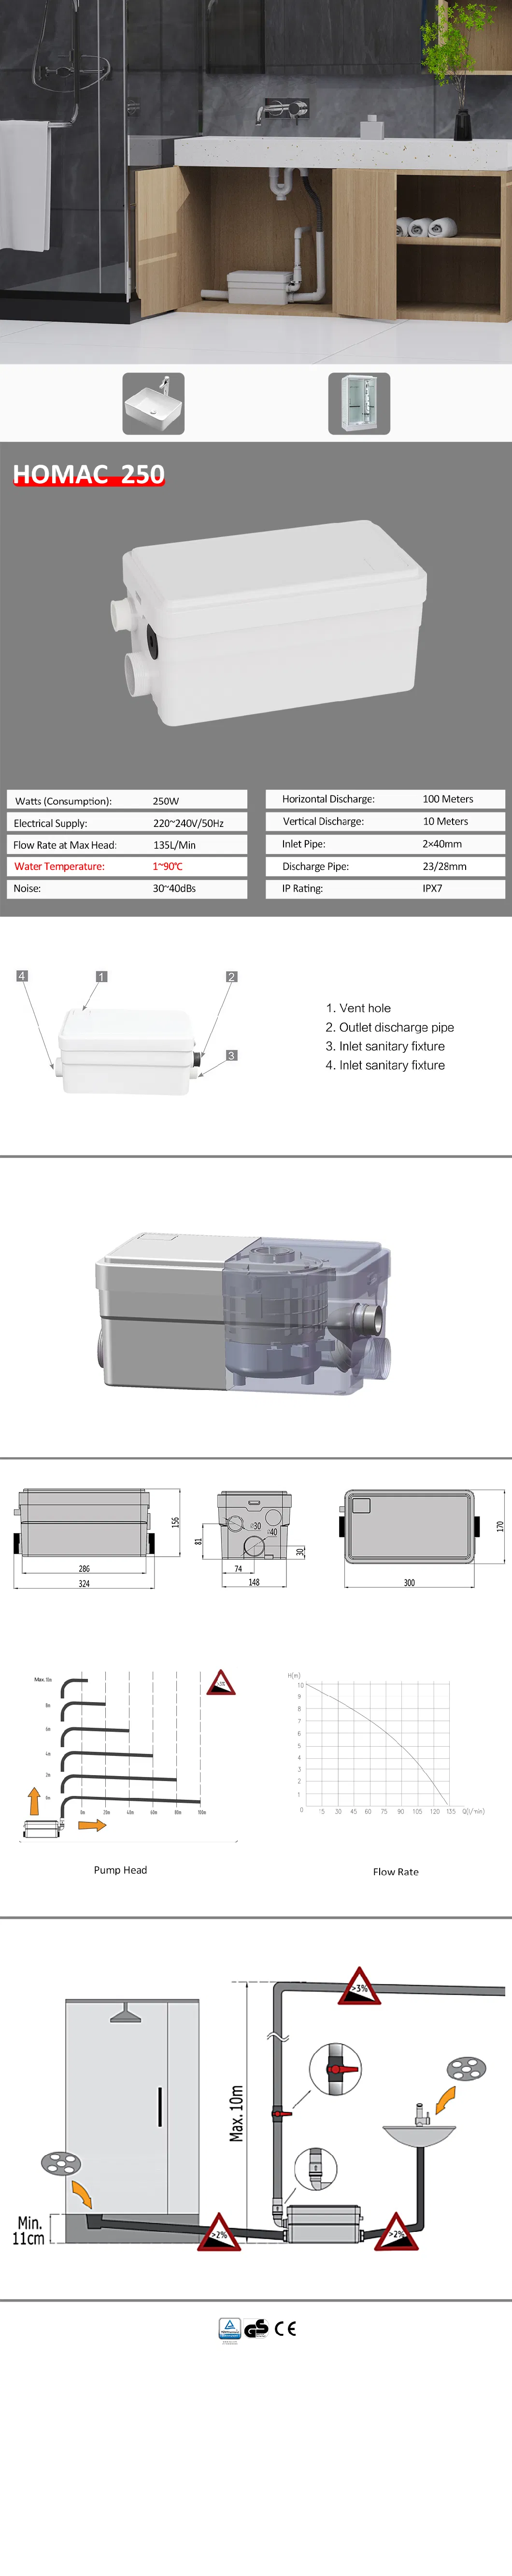 Homac 250 Mini Compact Shower Drain Sewage Wc Lift Pump